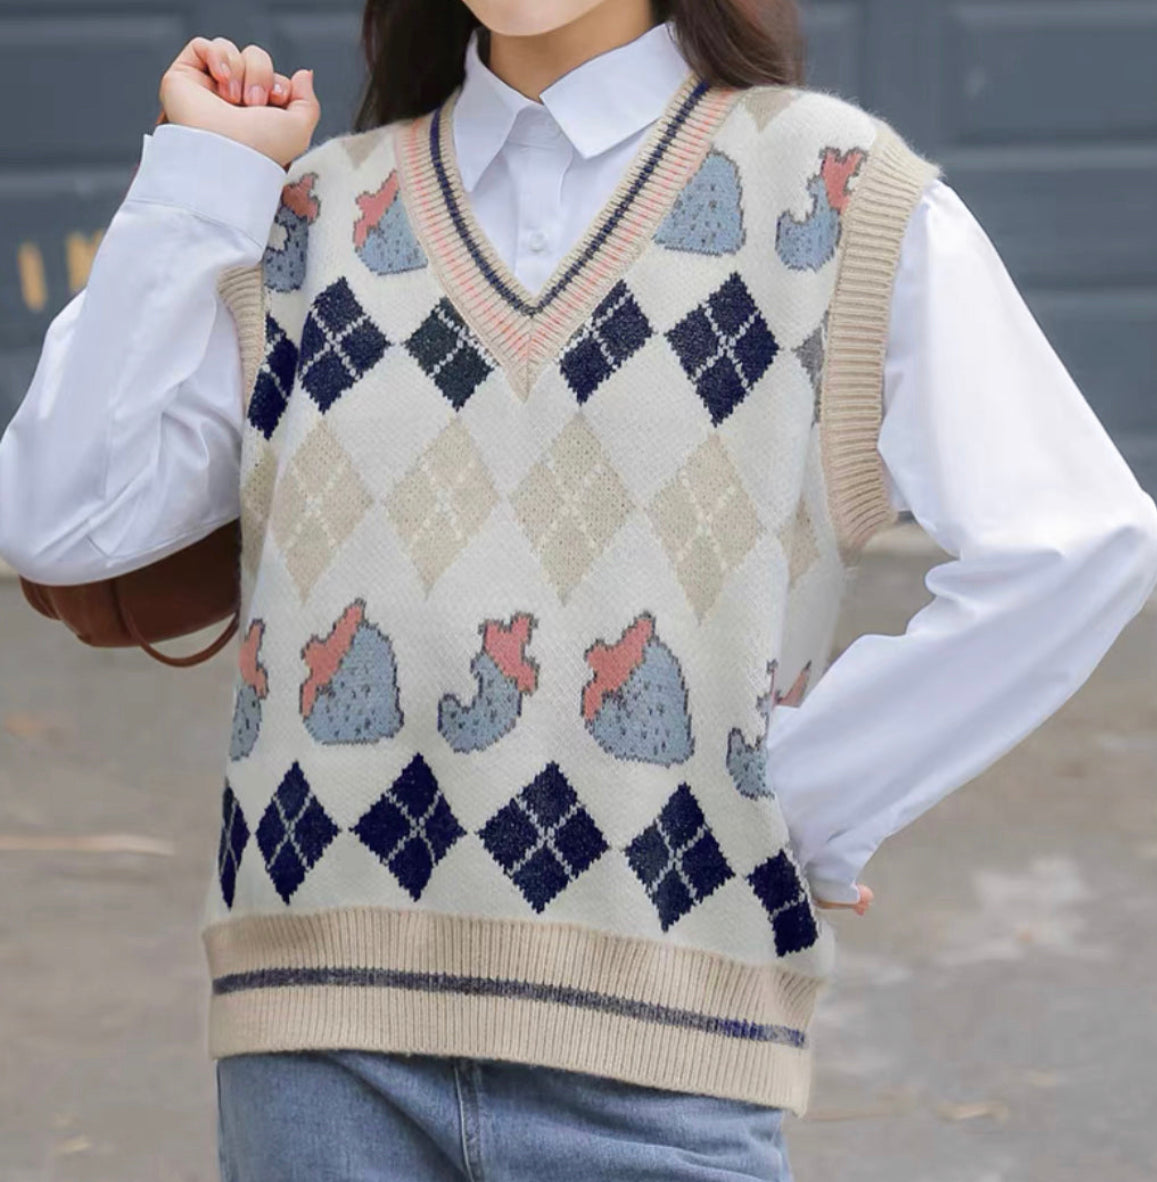 Harajuku Style Knitted Vest